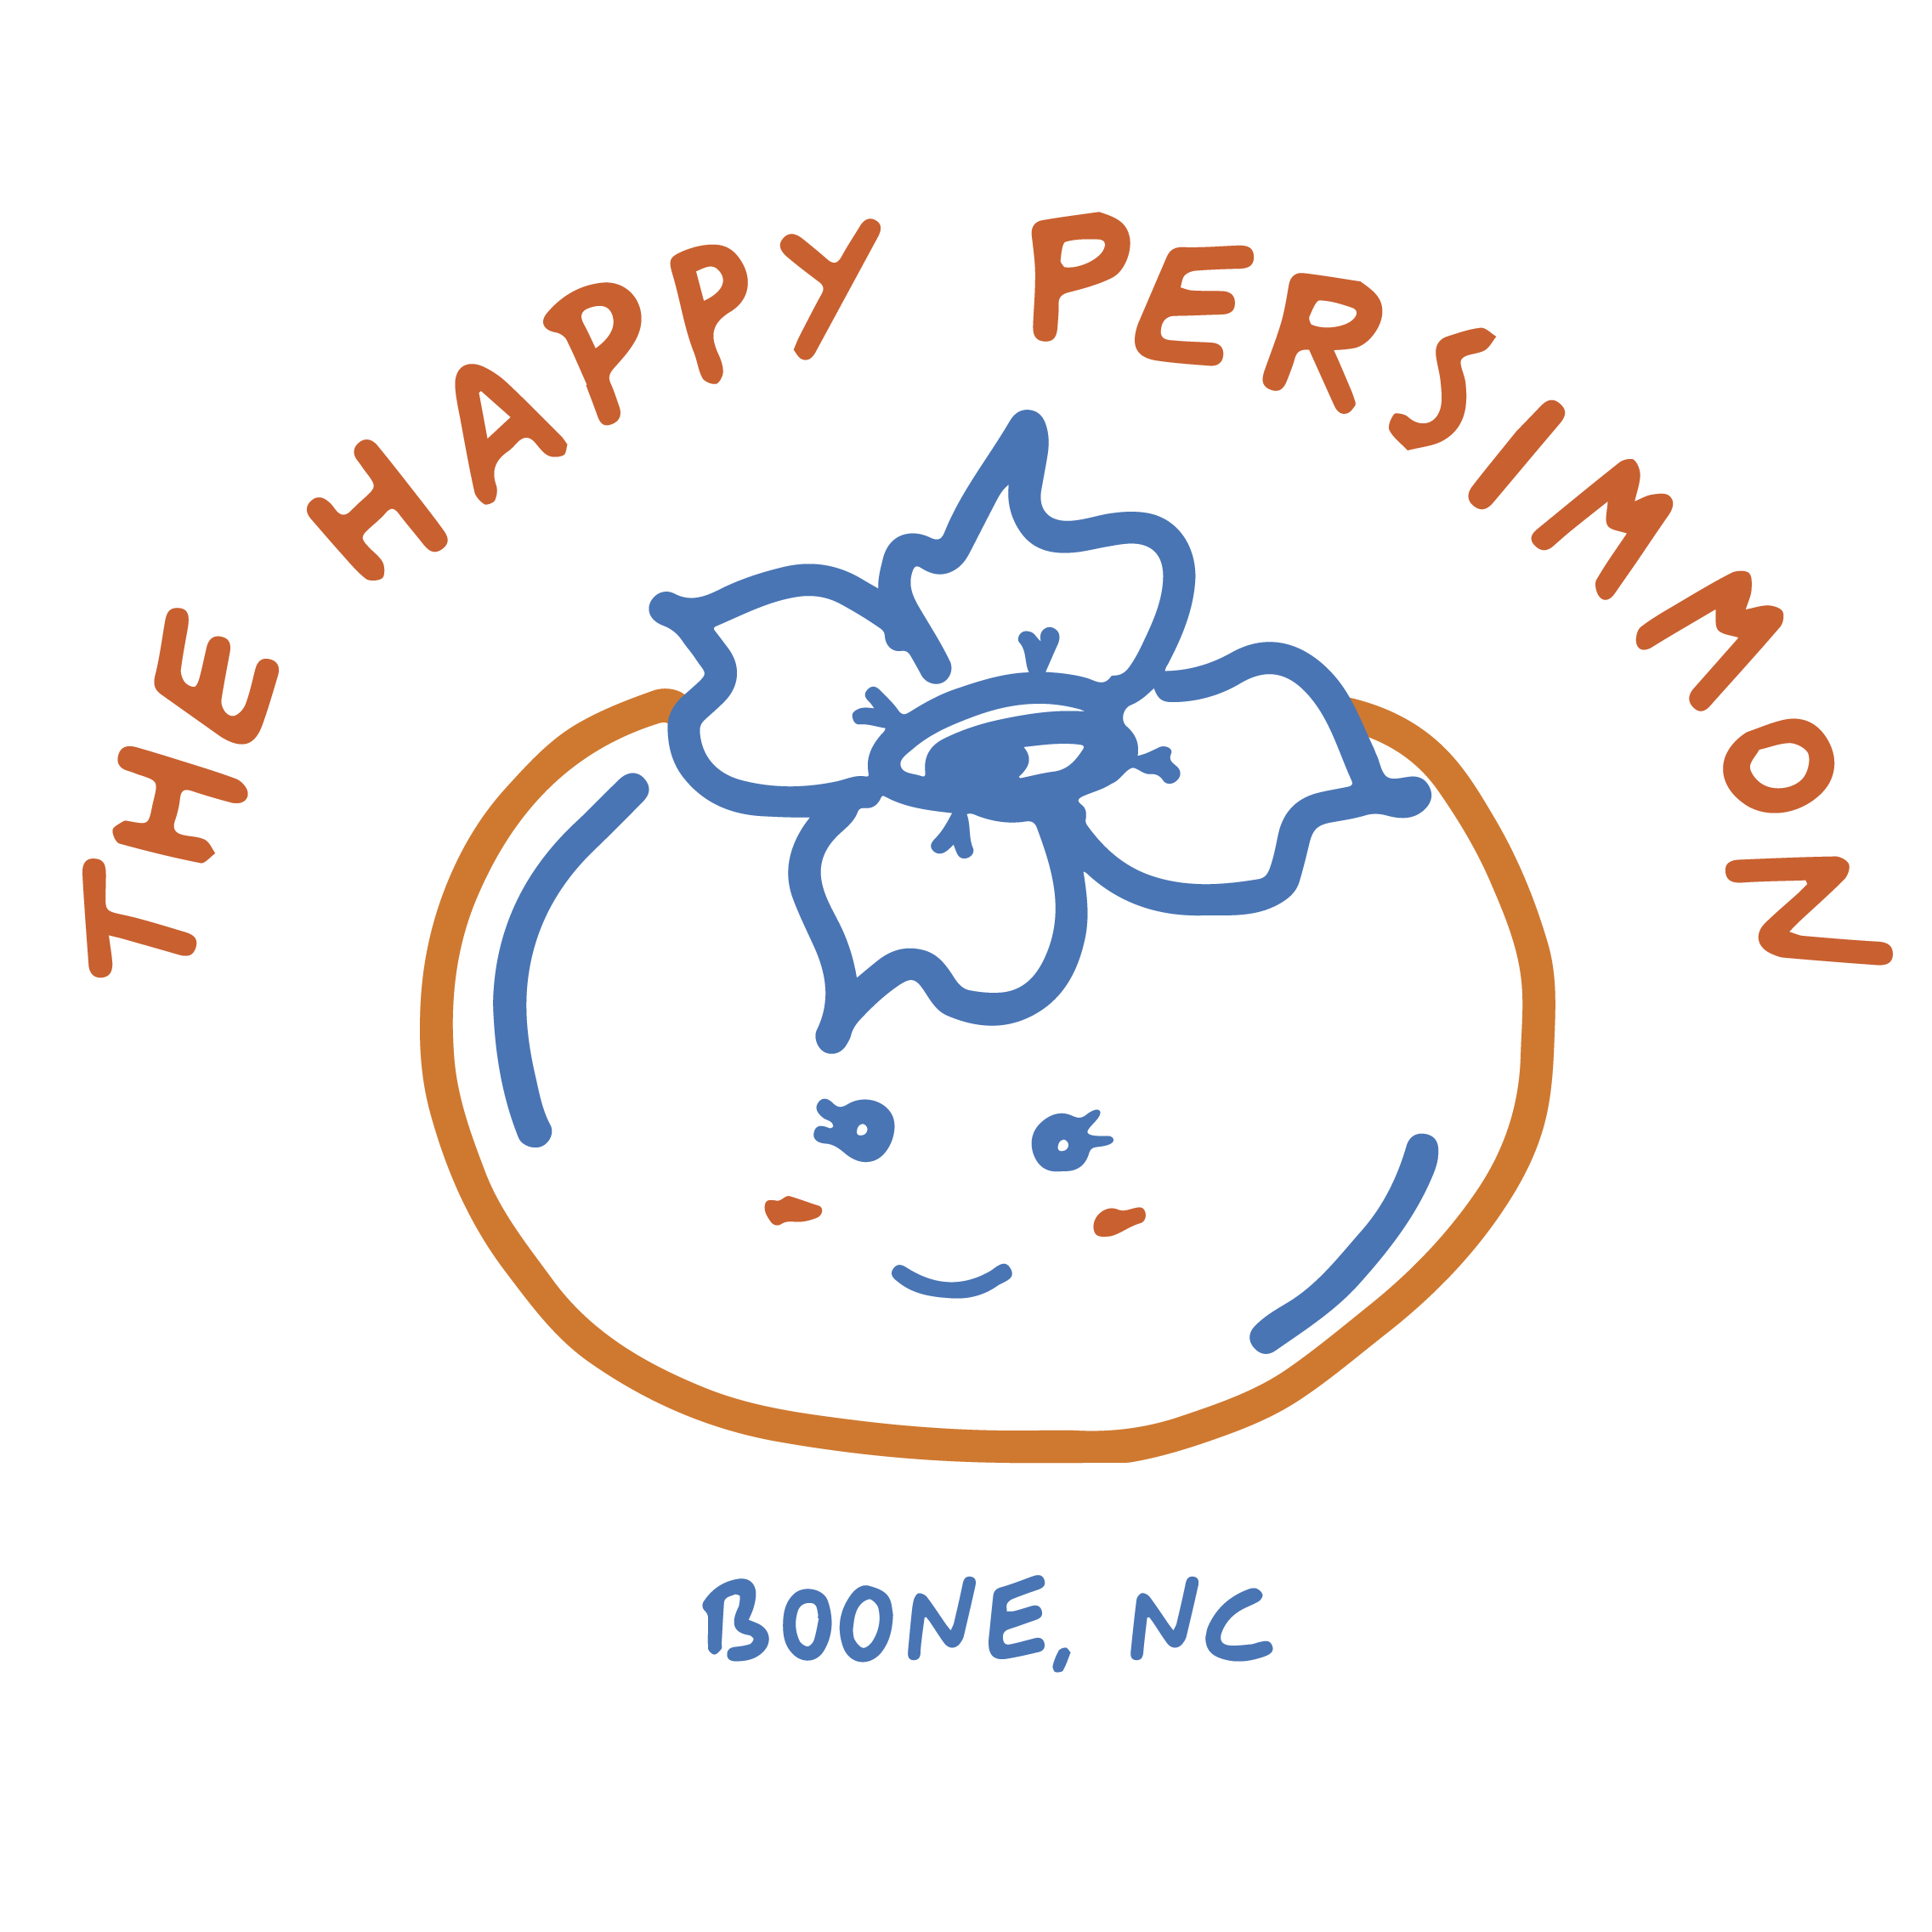 The Happy Persimmon